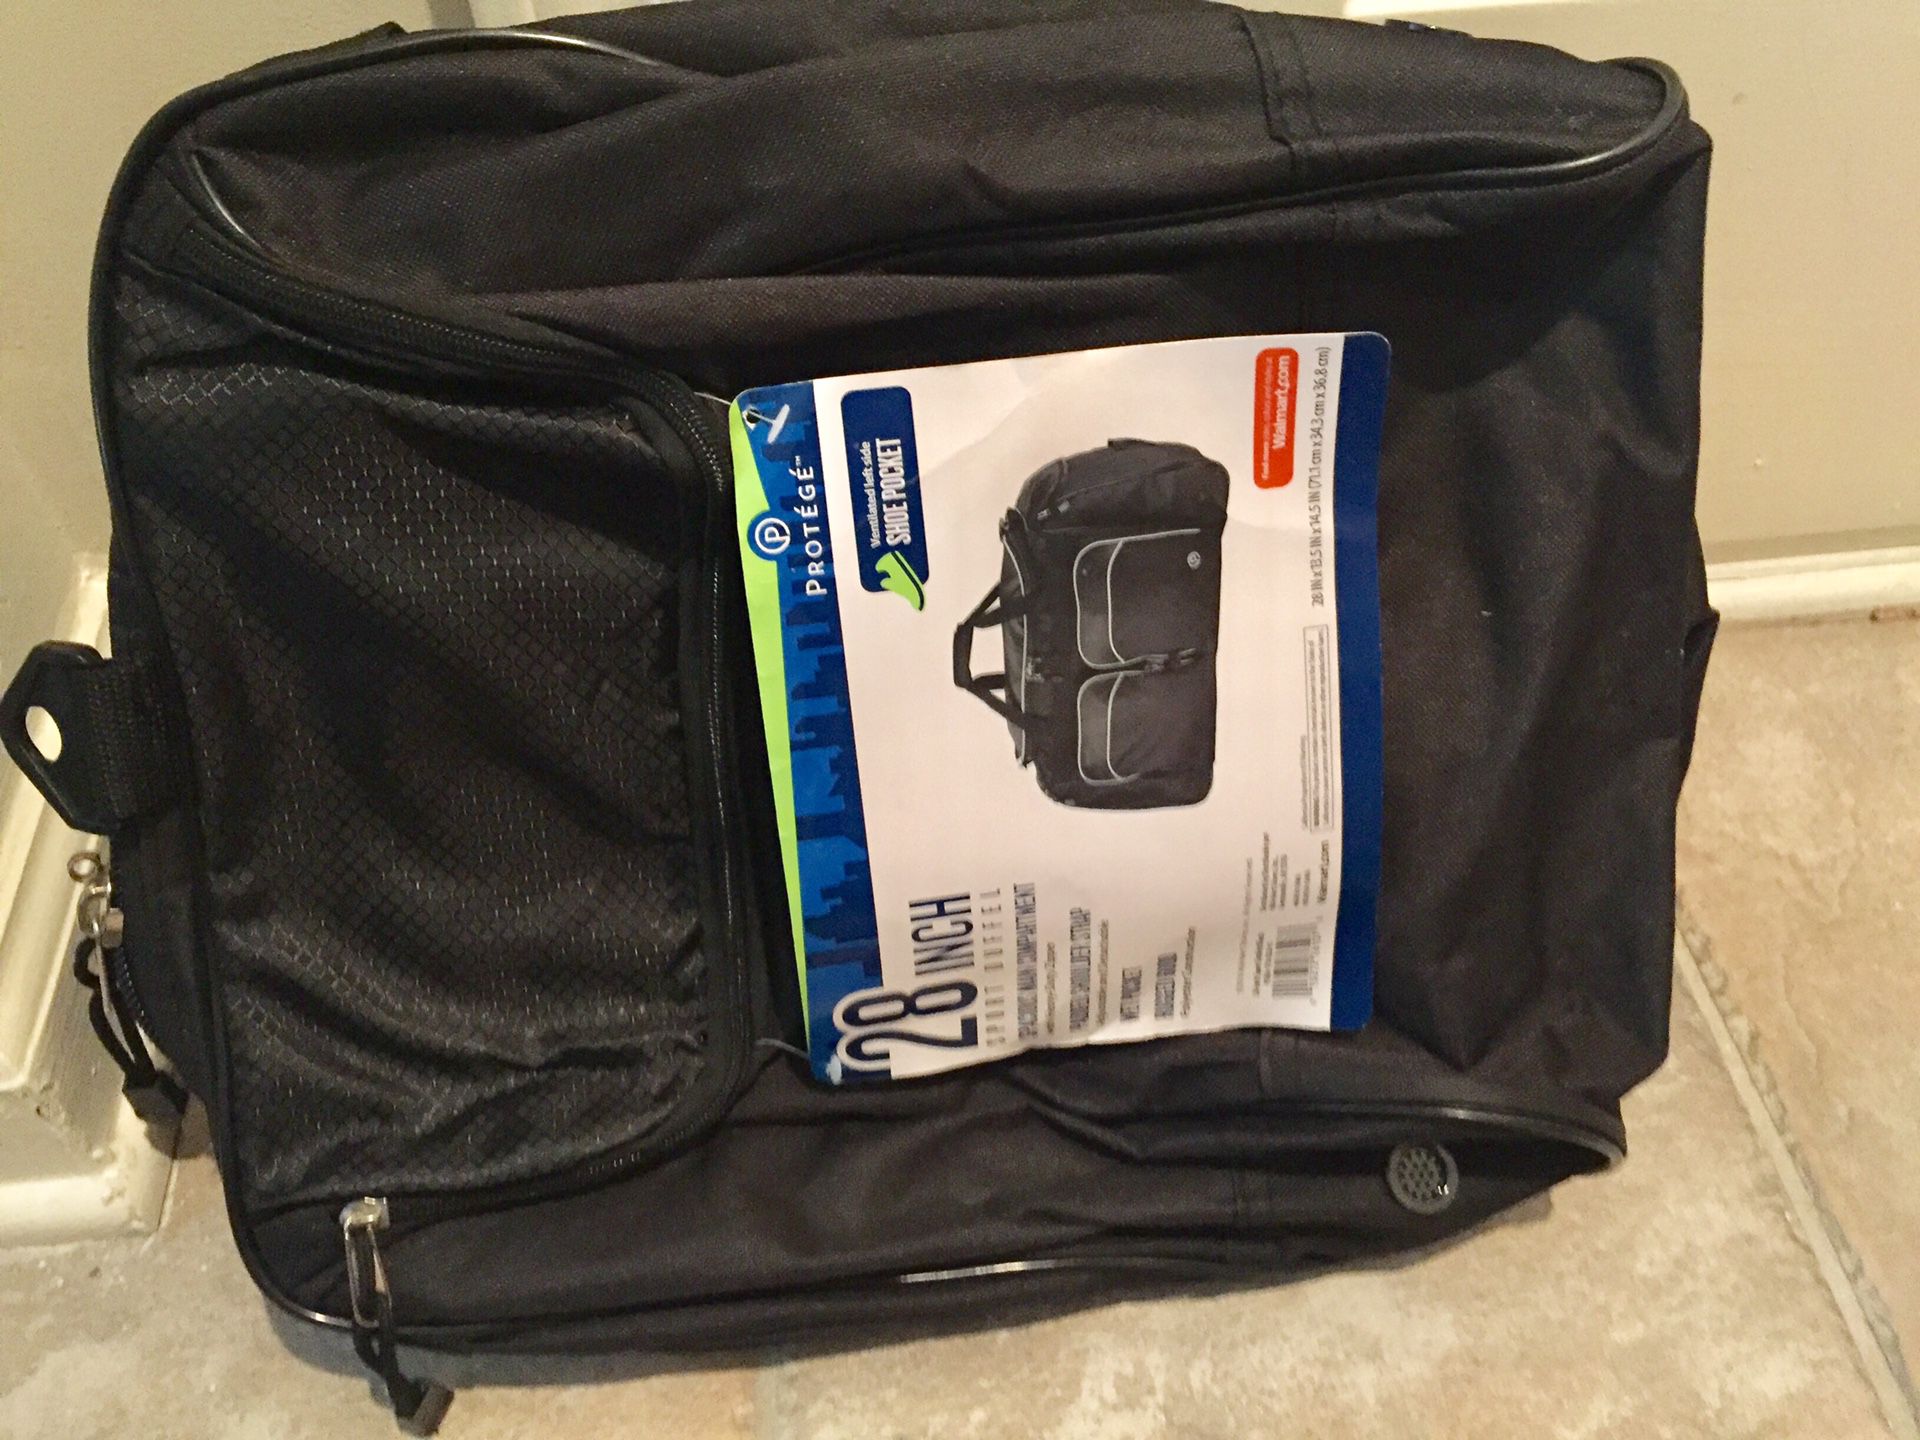 Duffel bag. Traveling bag. 28’ brand new never used.